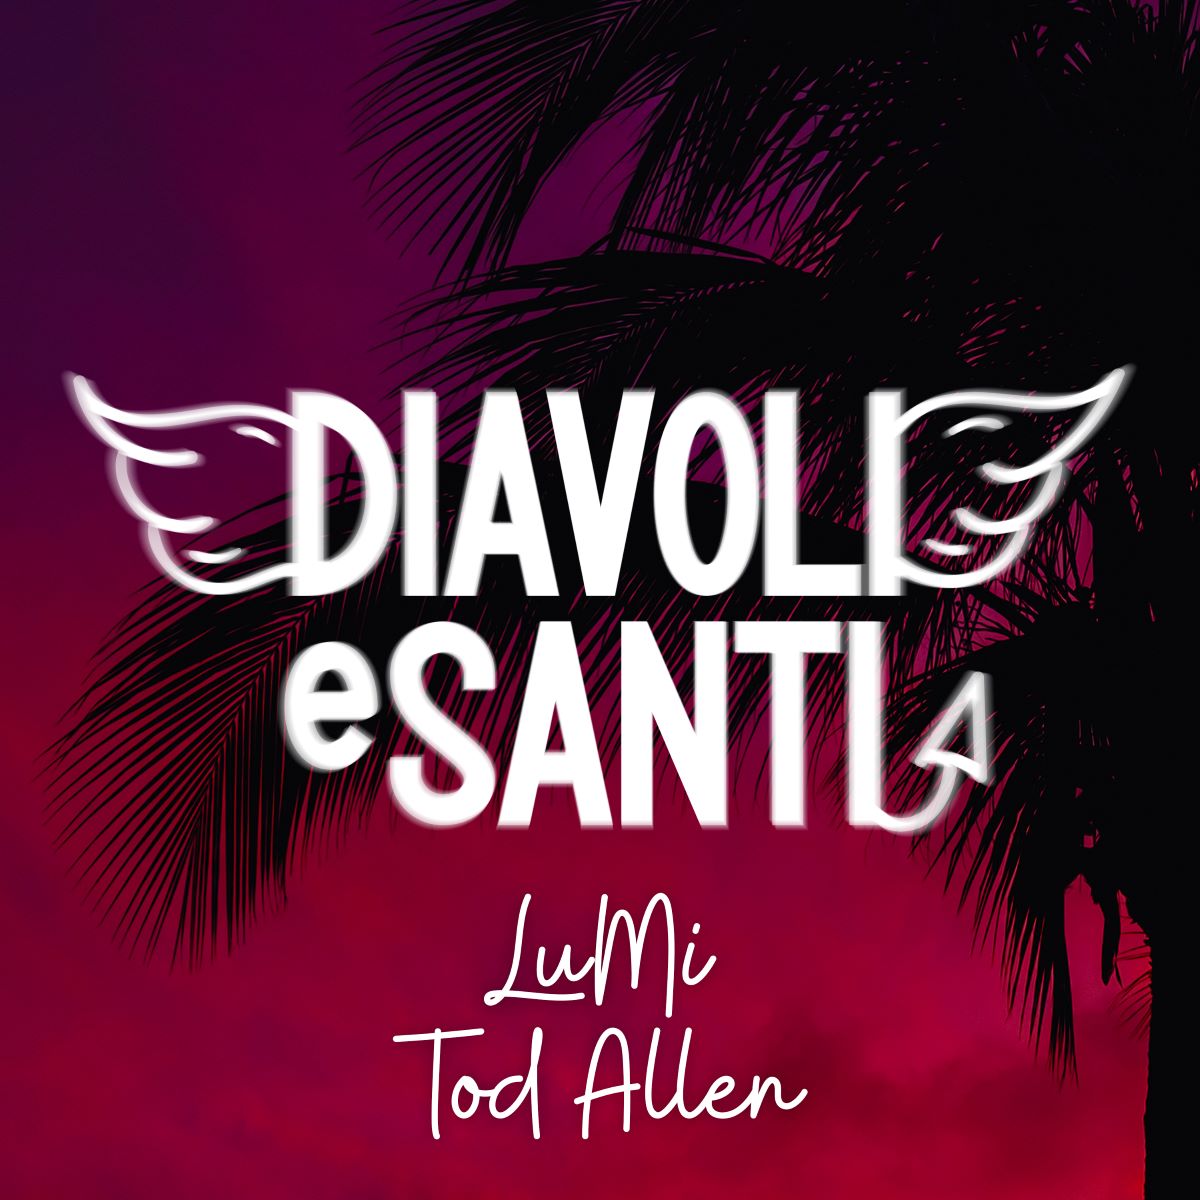 LuMi & Tod Allen – “Diavoli e Santi”